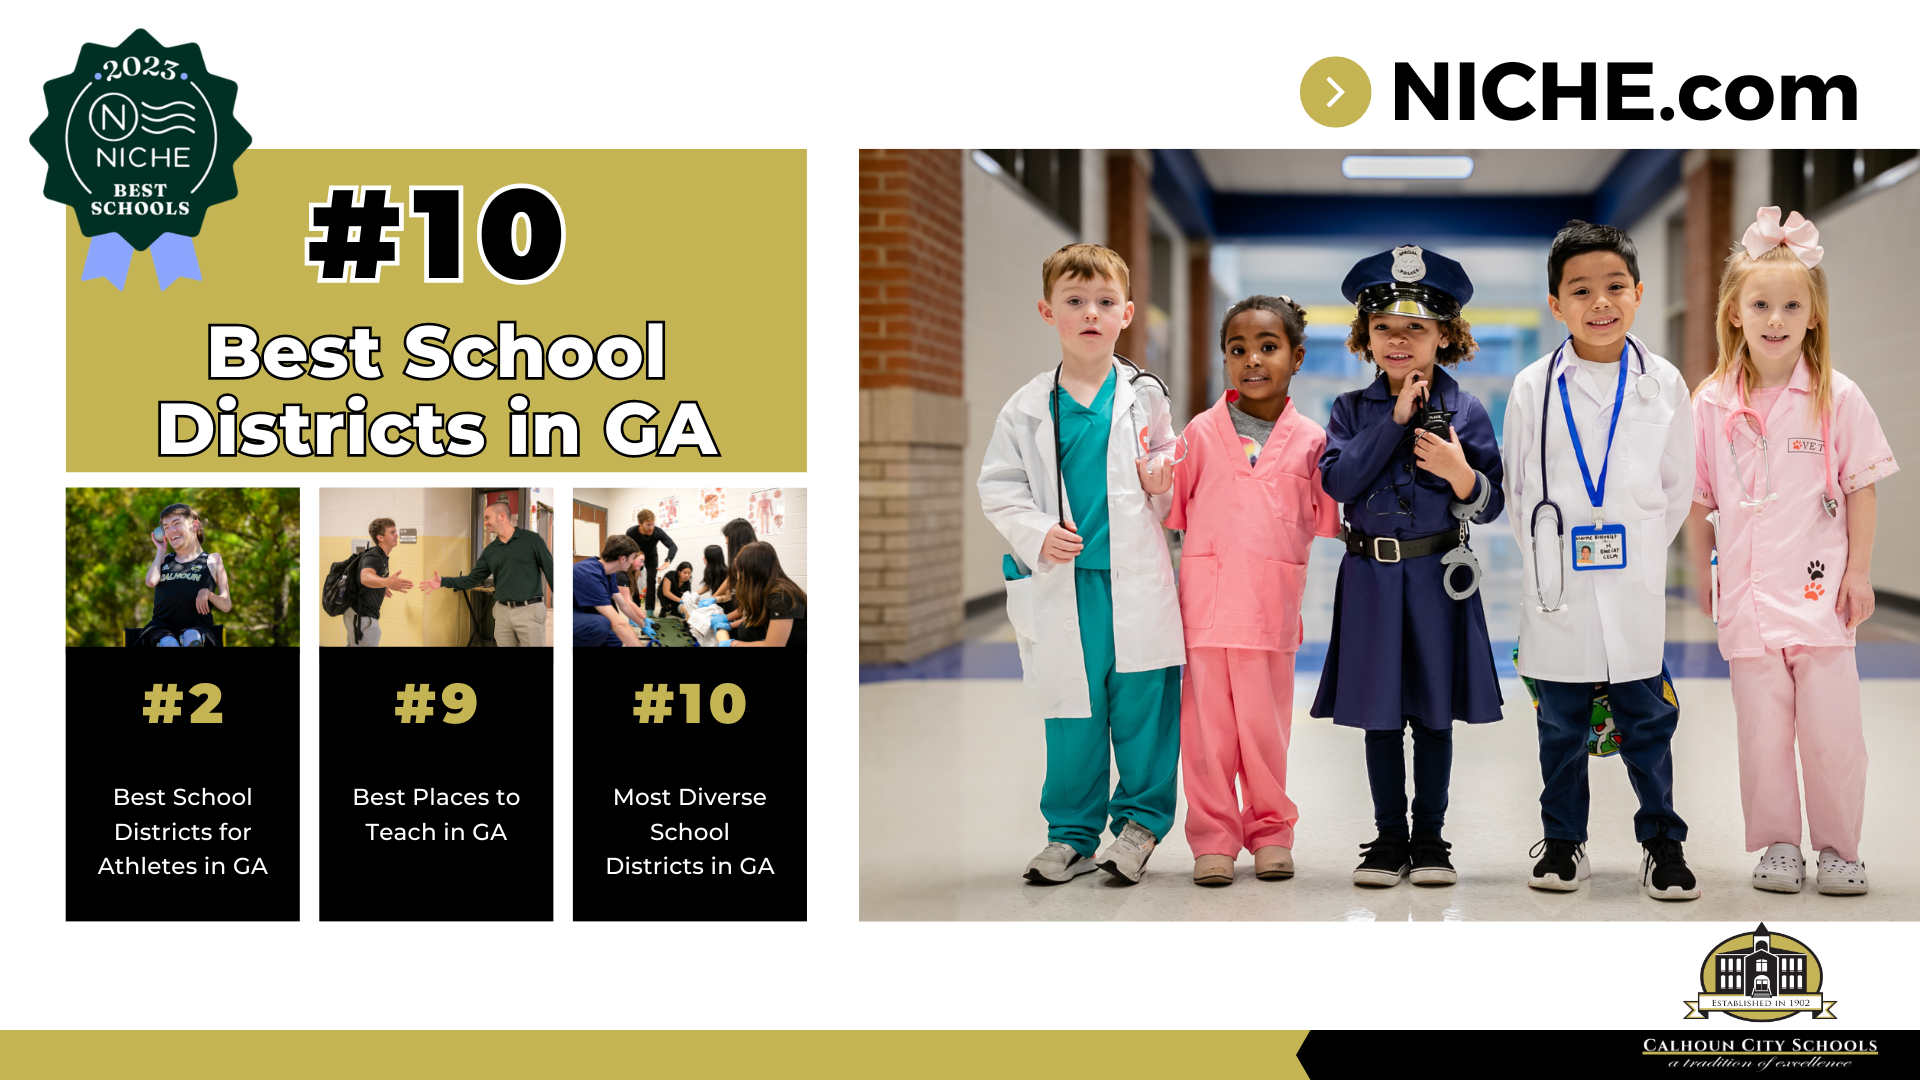 Niche.com #10 best school districts in GA